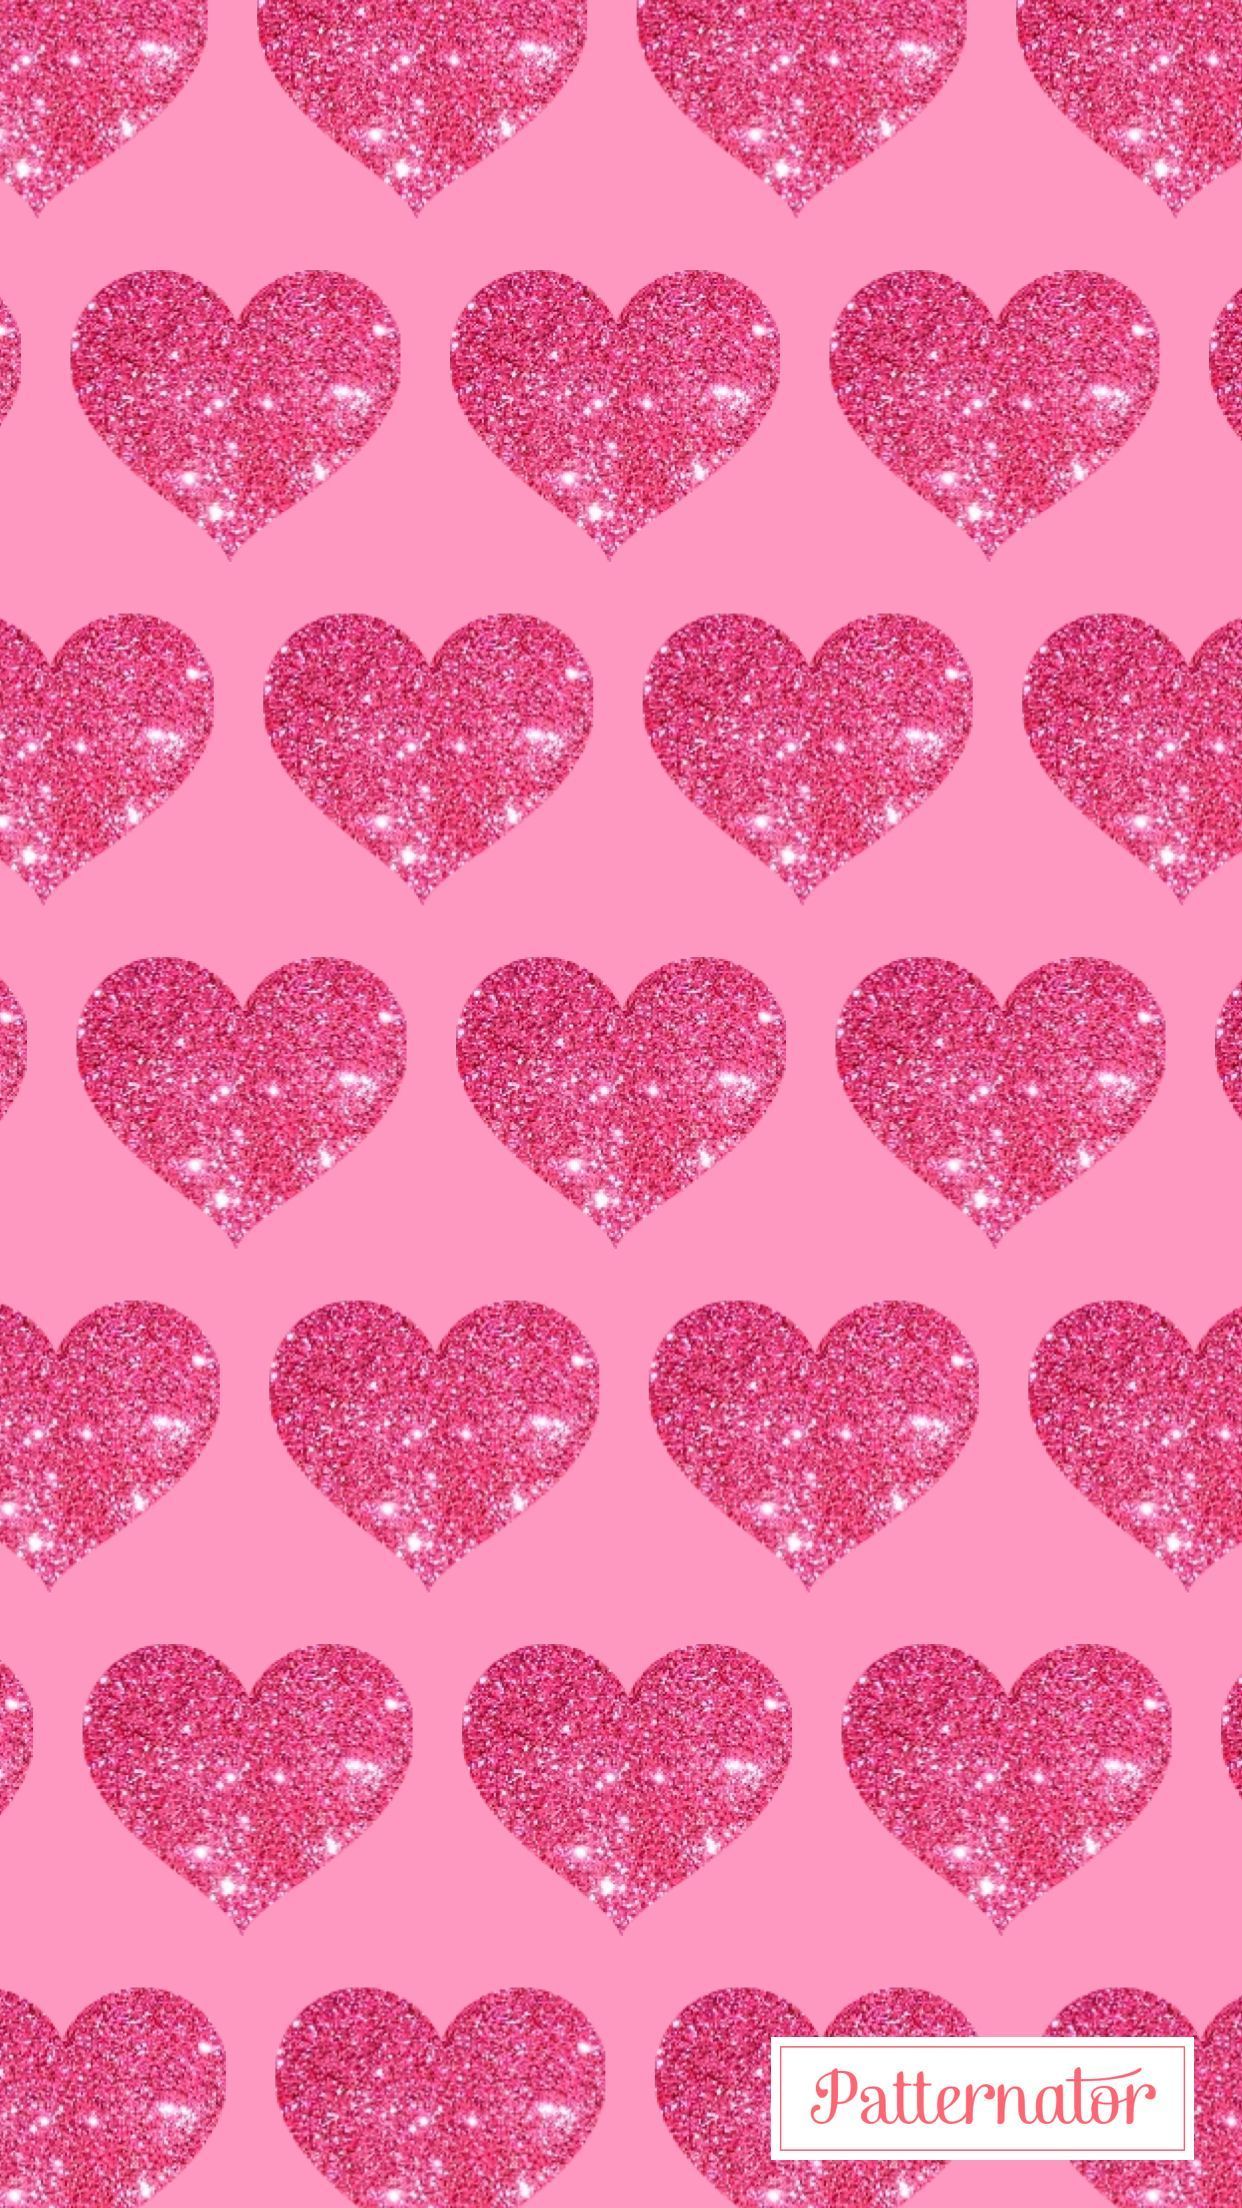 Glitter Heart iPhone Wallpaper Free Glitter Heart iPhone Background